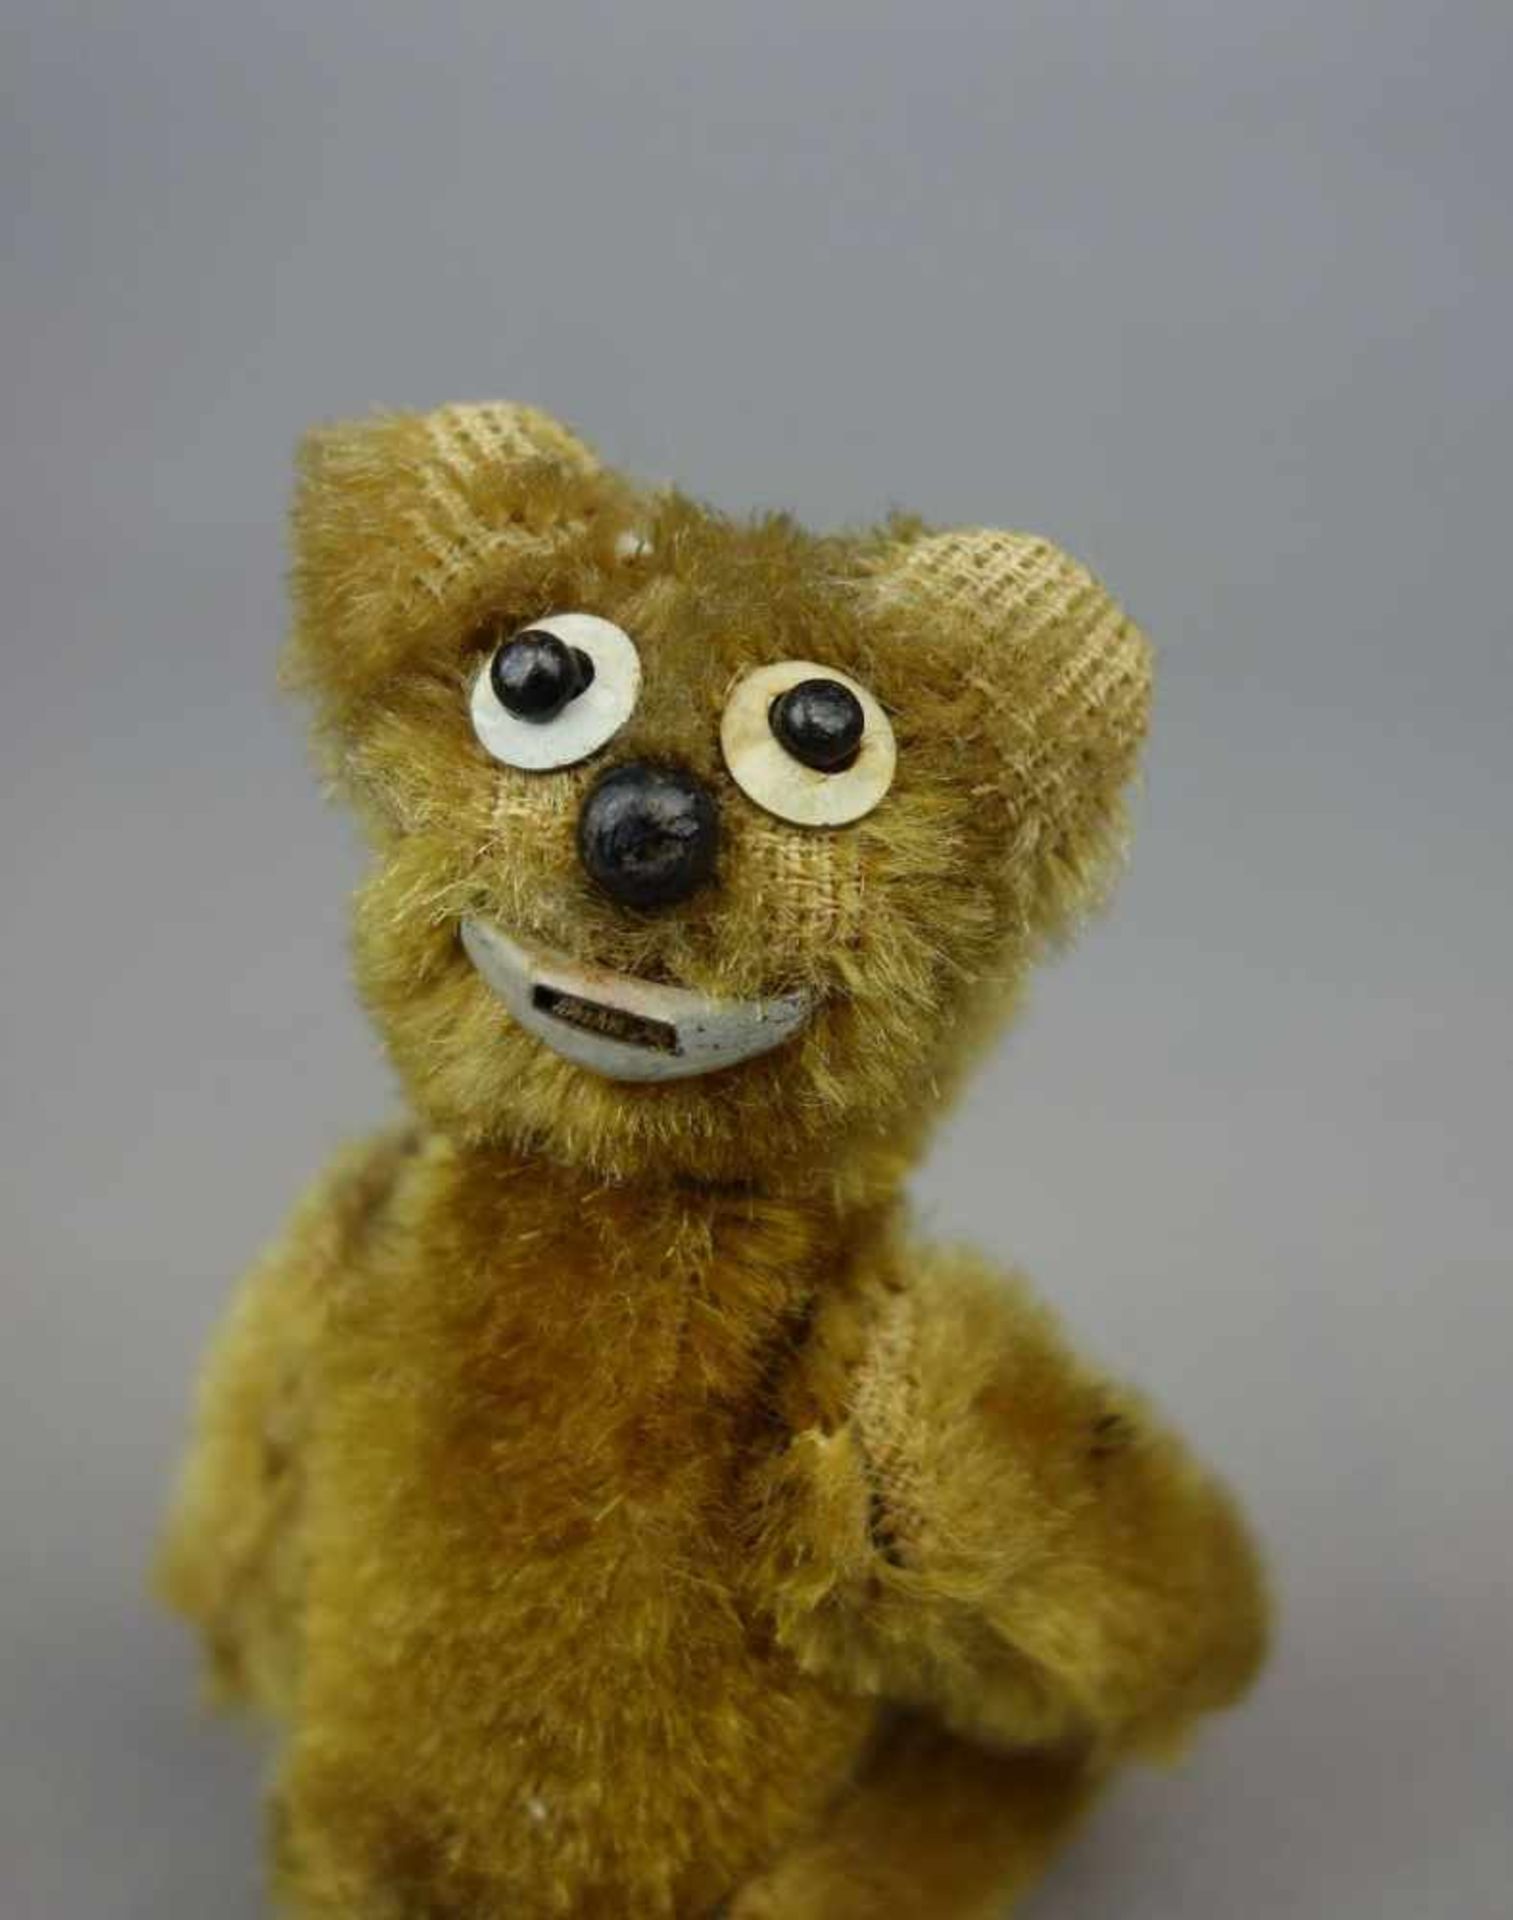 SPIELZEUG / TEDDYBÄR: JANUS-TEDDY SCHUCO / teddy bear, 1950er Jahre, Manufaktur Schuco / Nürnberg. - Image 3 of 5